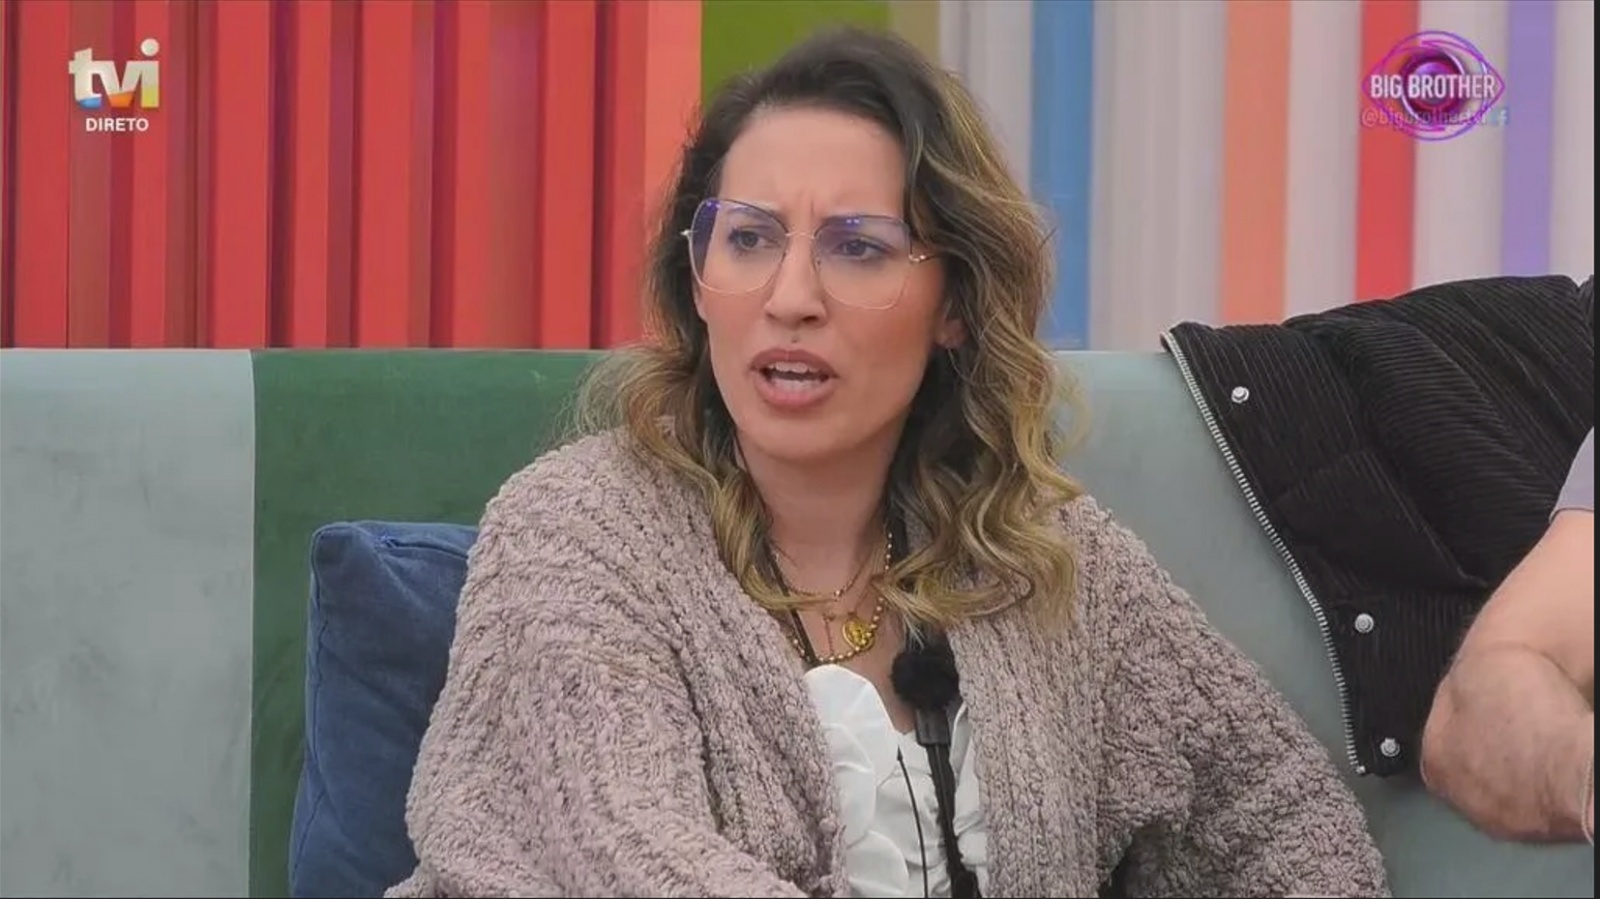 "Big Brother" - Catarina Miranda indignada: "Isto parece uma casa de pu***"